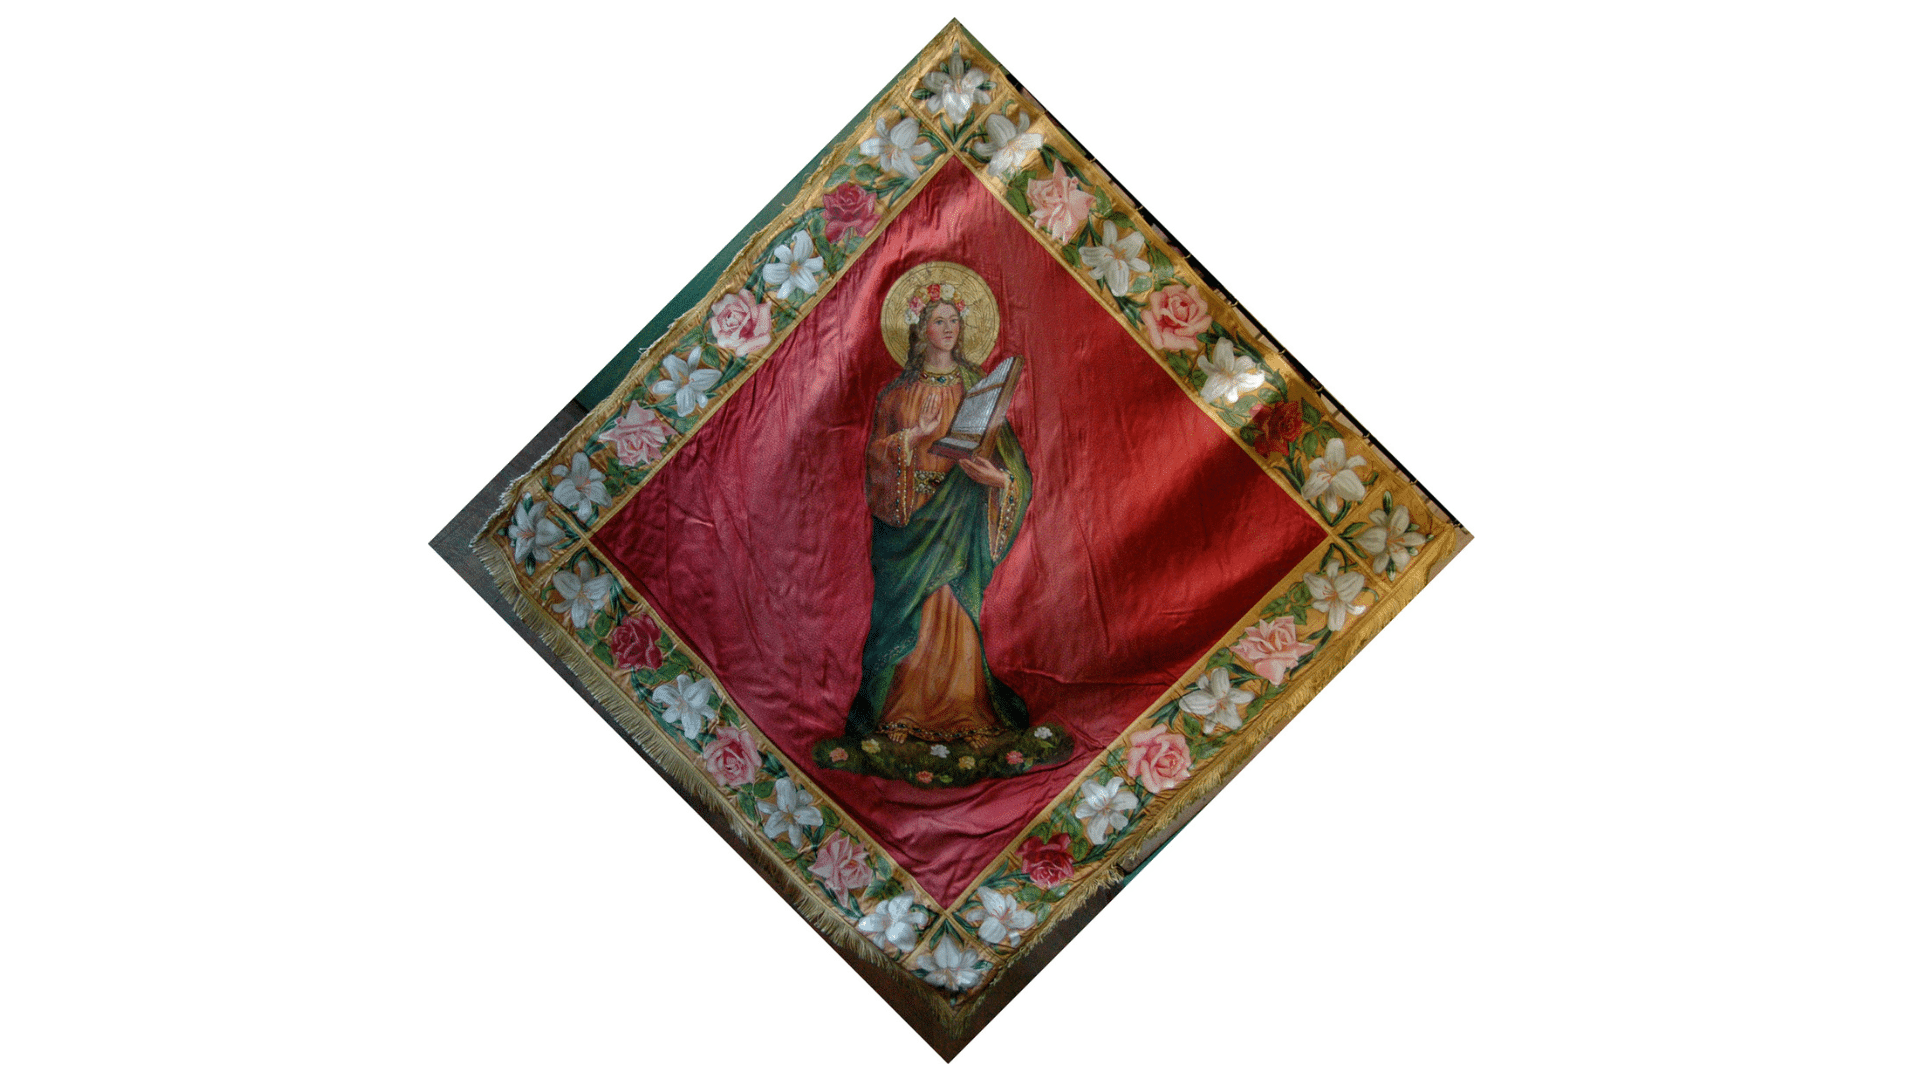 Die heilige Cäcilia auf einer Fahne aus dem Jahr 1929 | Sciarinen 19:04, 5 April 2007 (UTC), Public domain, via Wikimedia Commons